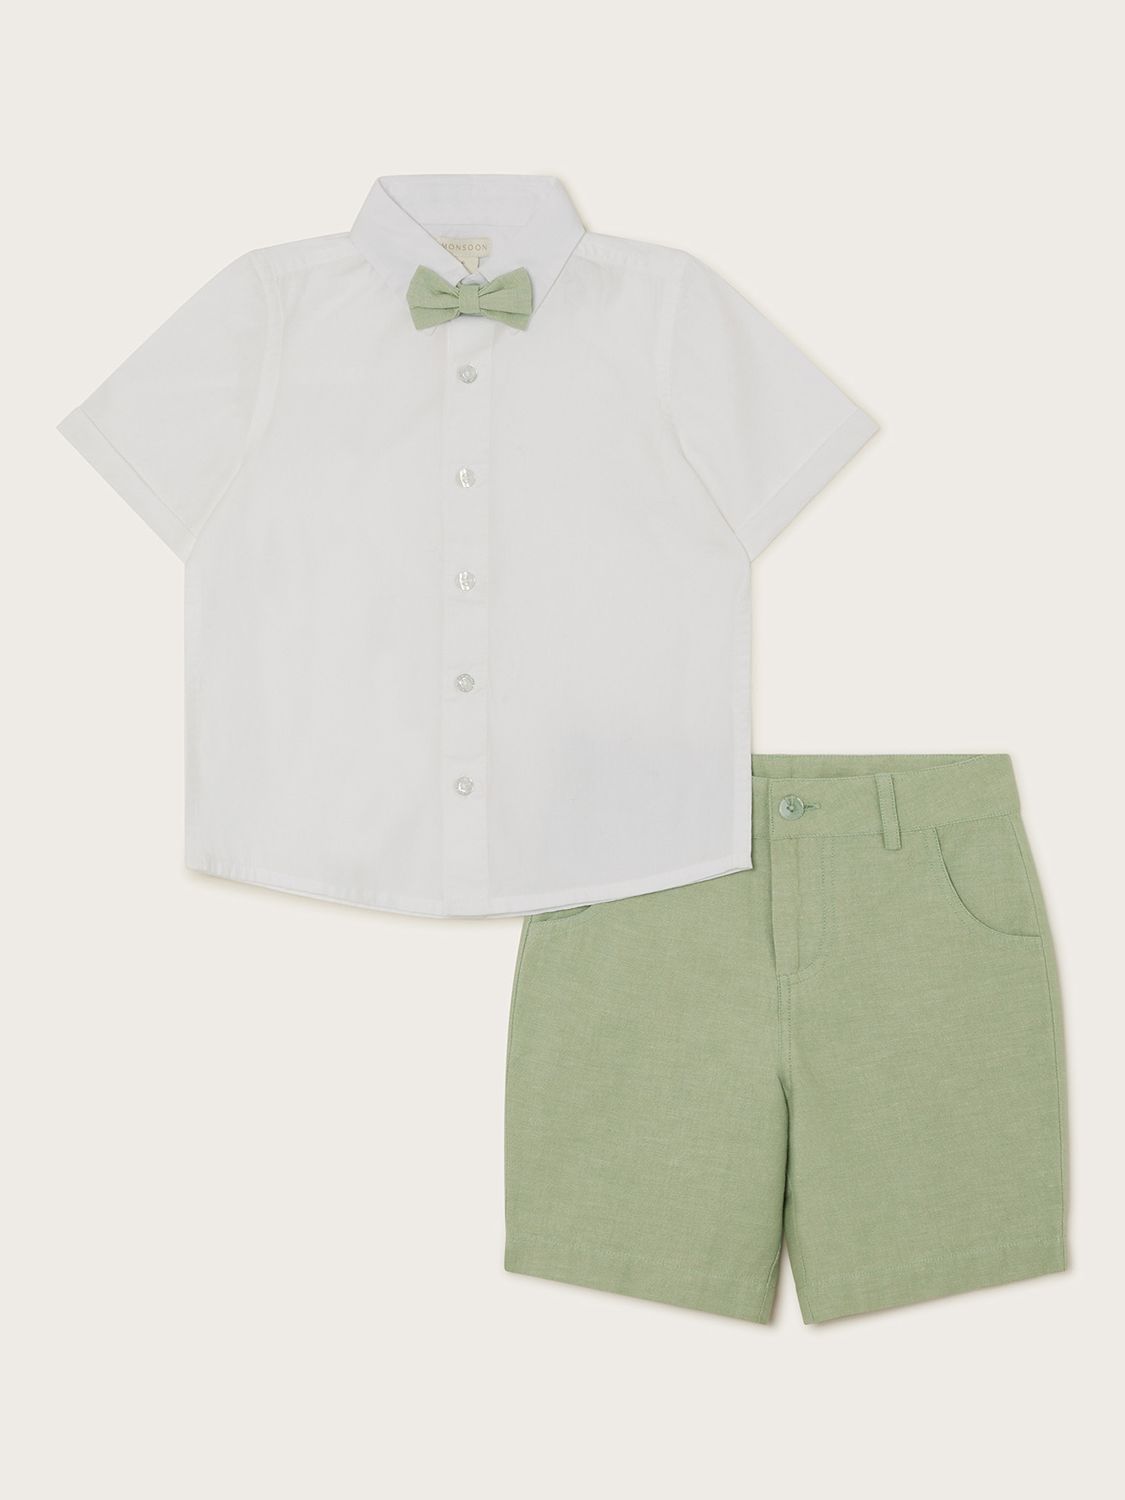 Monsoon Kids' Smart Shirt, Shorts & Bow Tie Set, Sage, 10 years